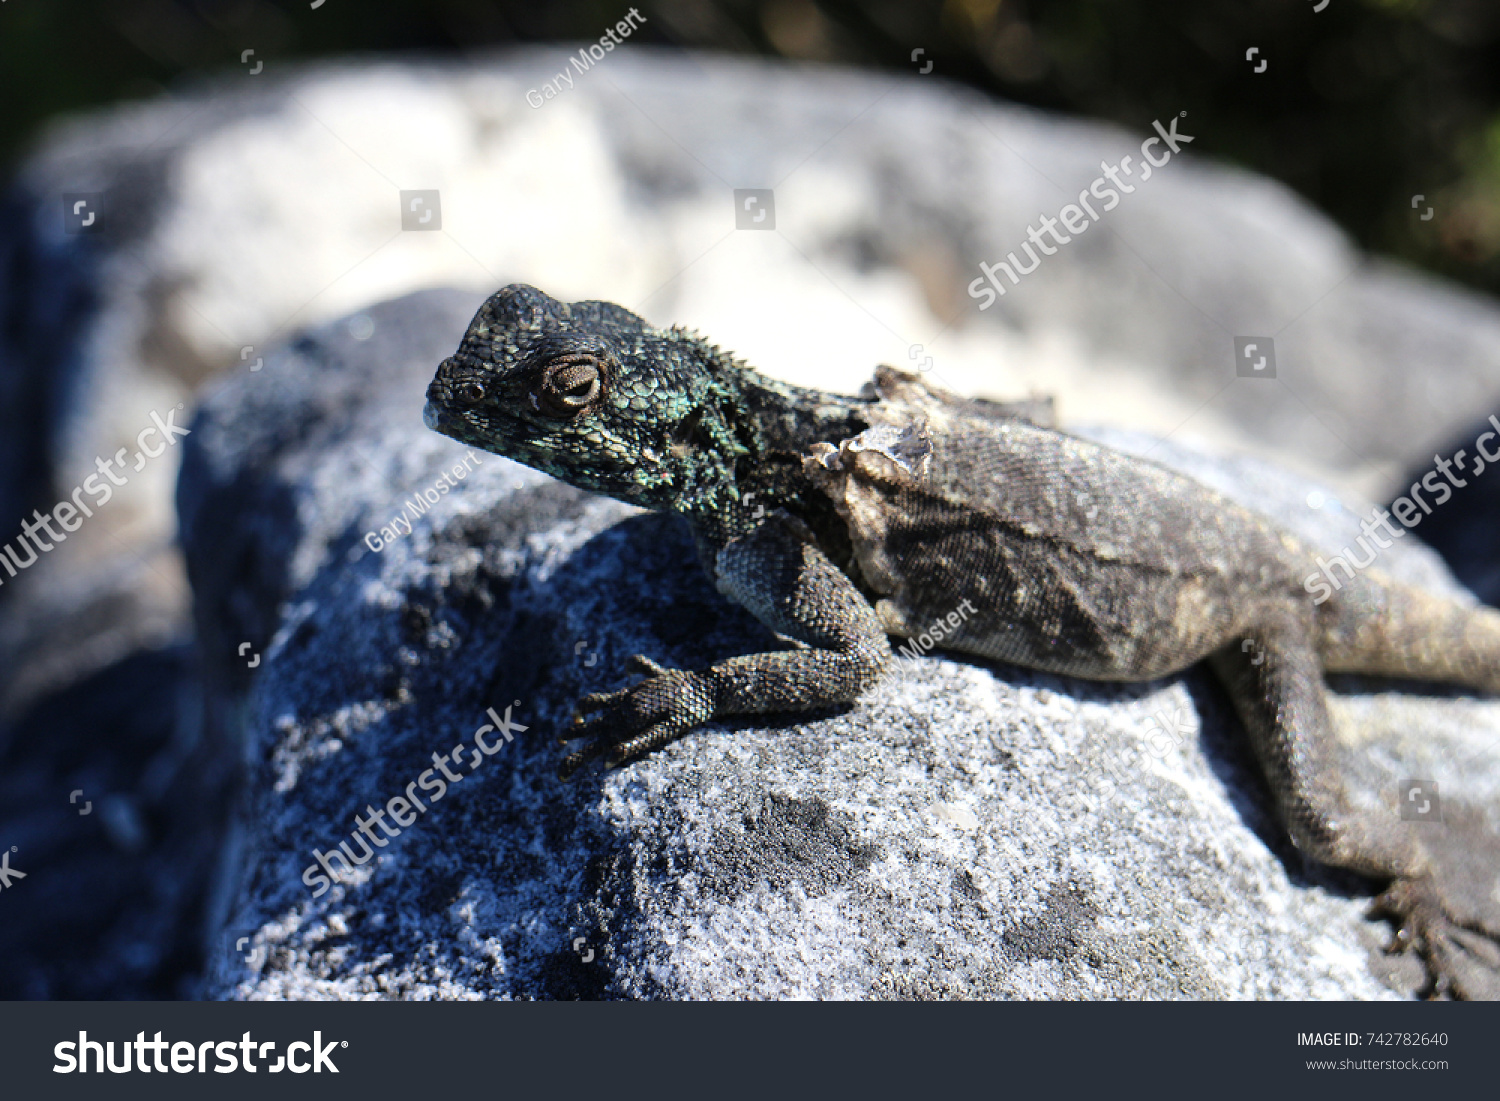 Lizard moulting on a rock #742782640